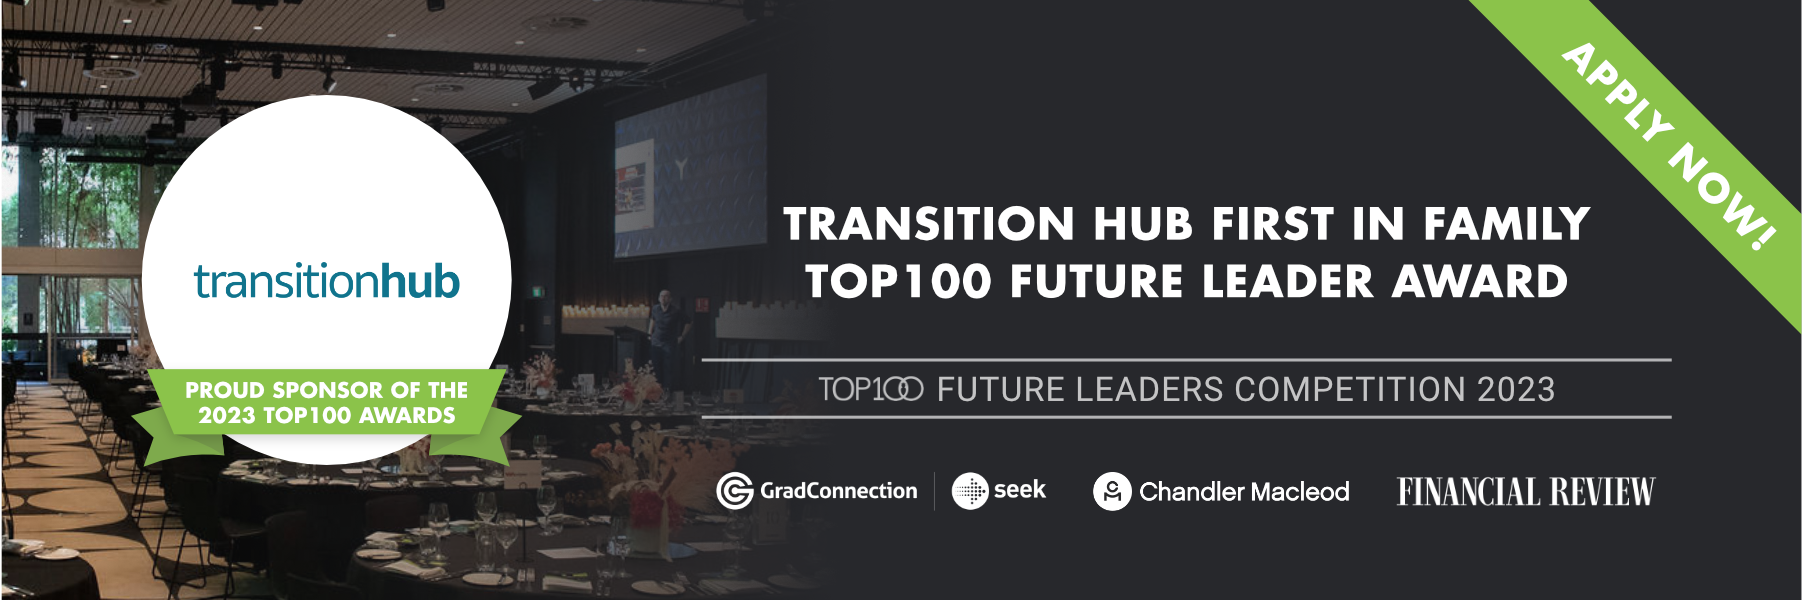 transition hub top100